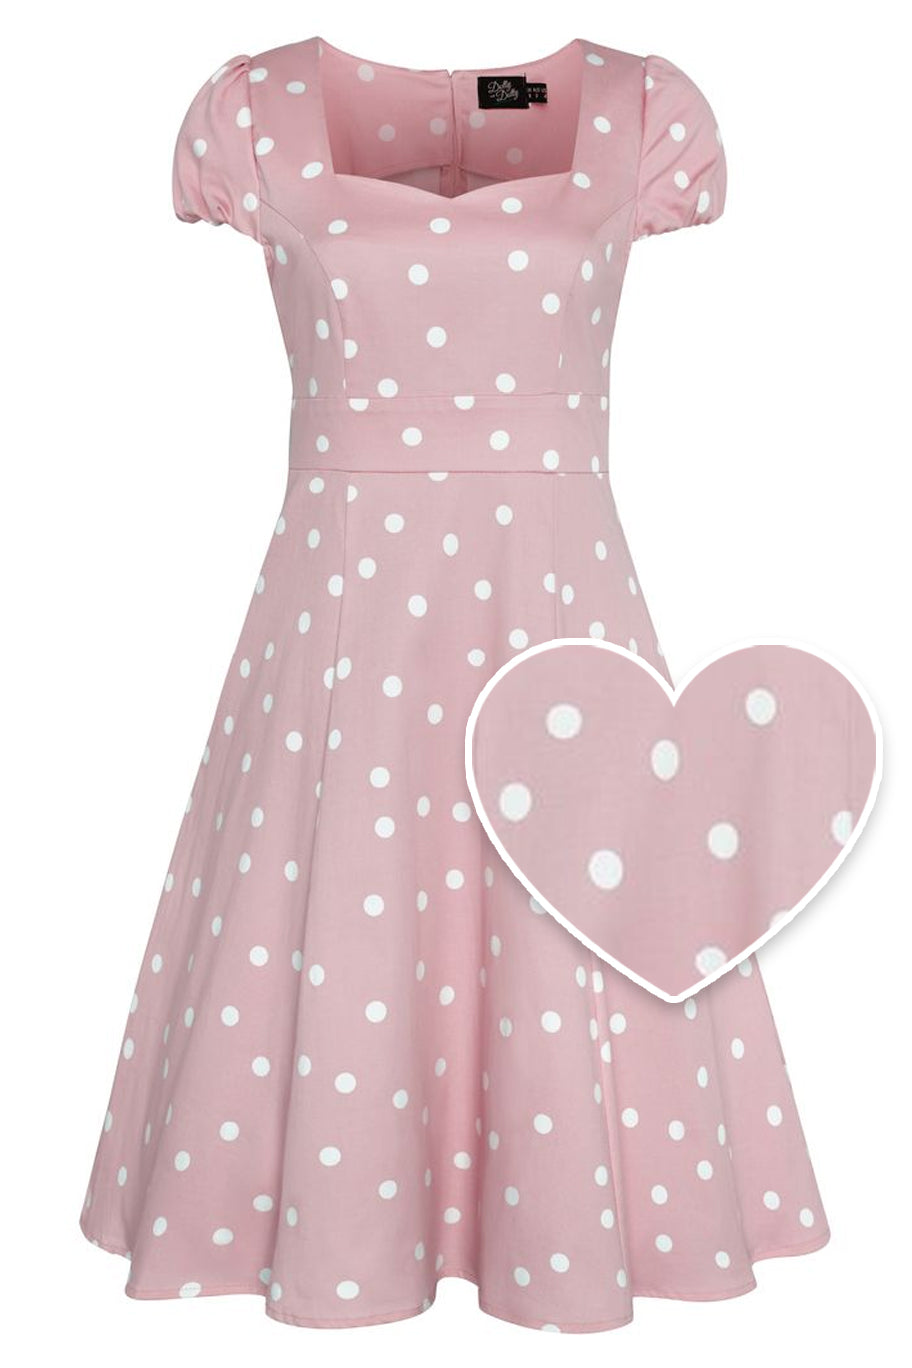 Pink Polka Dot Skater Dress